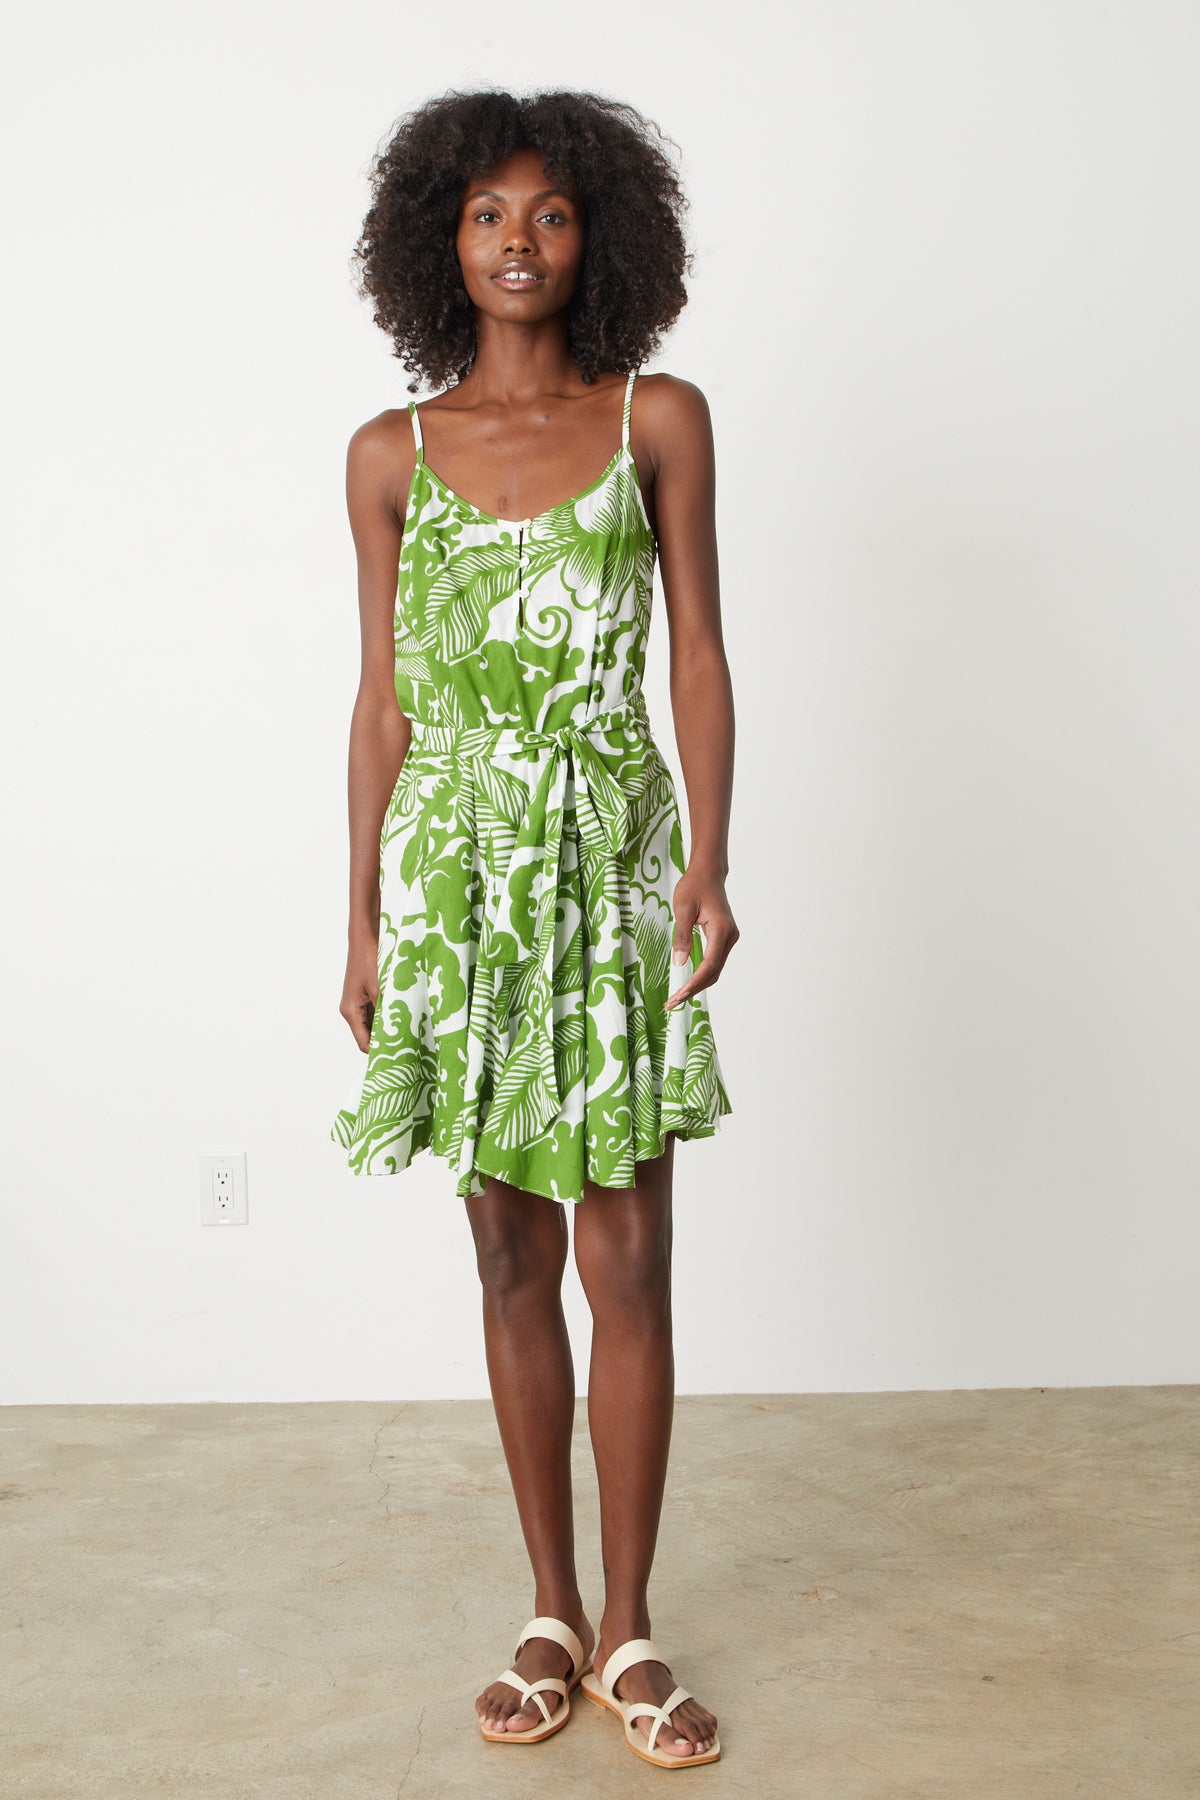 A woman wearing the Velvet by Graham & Spencer VIVIAN PRINTED DRESS, a floral print dress.-26774913450177